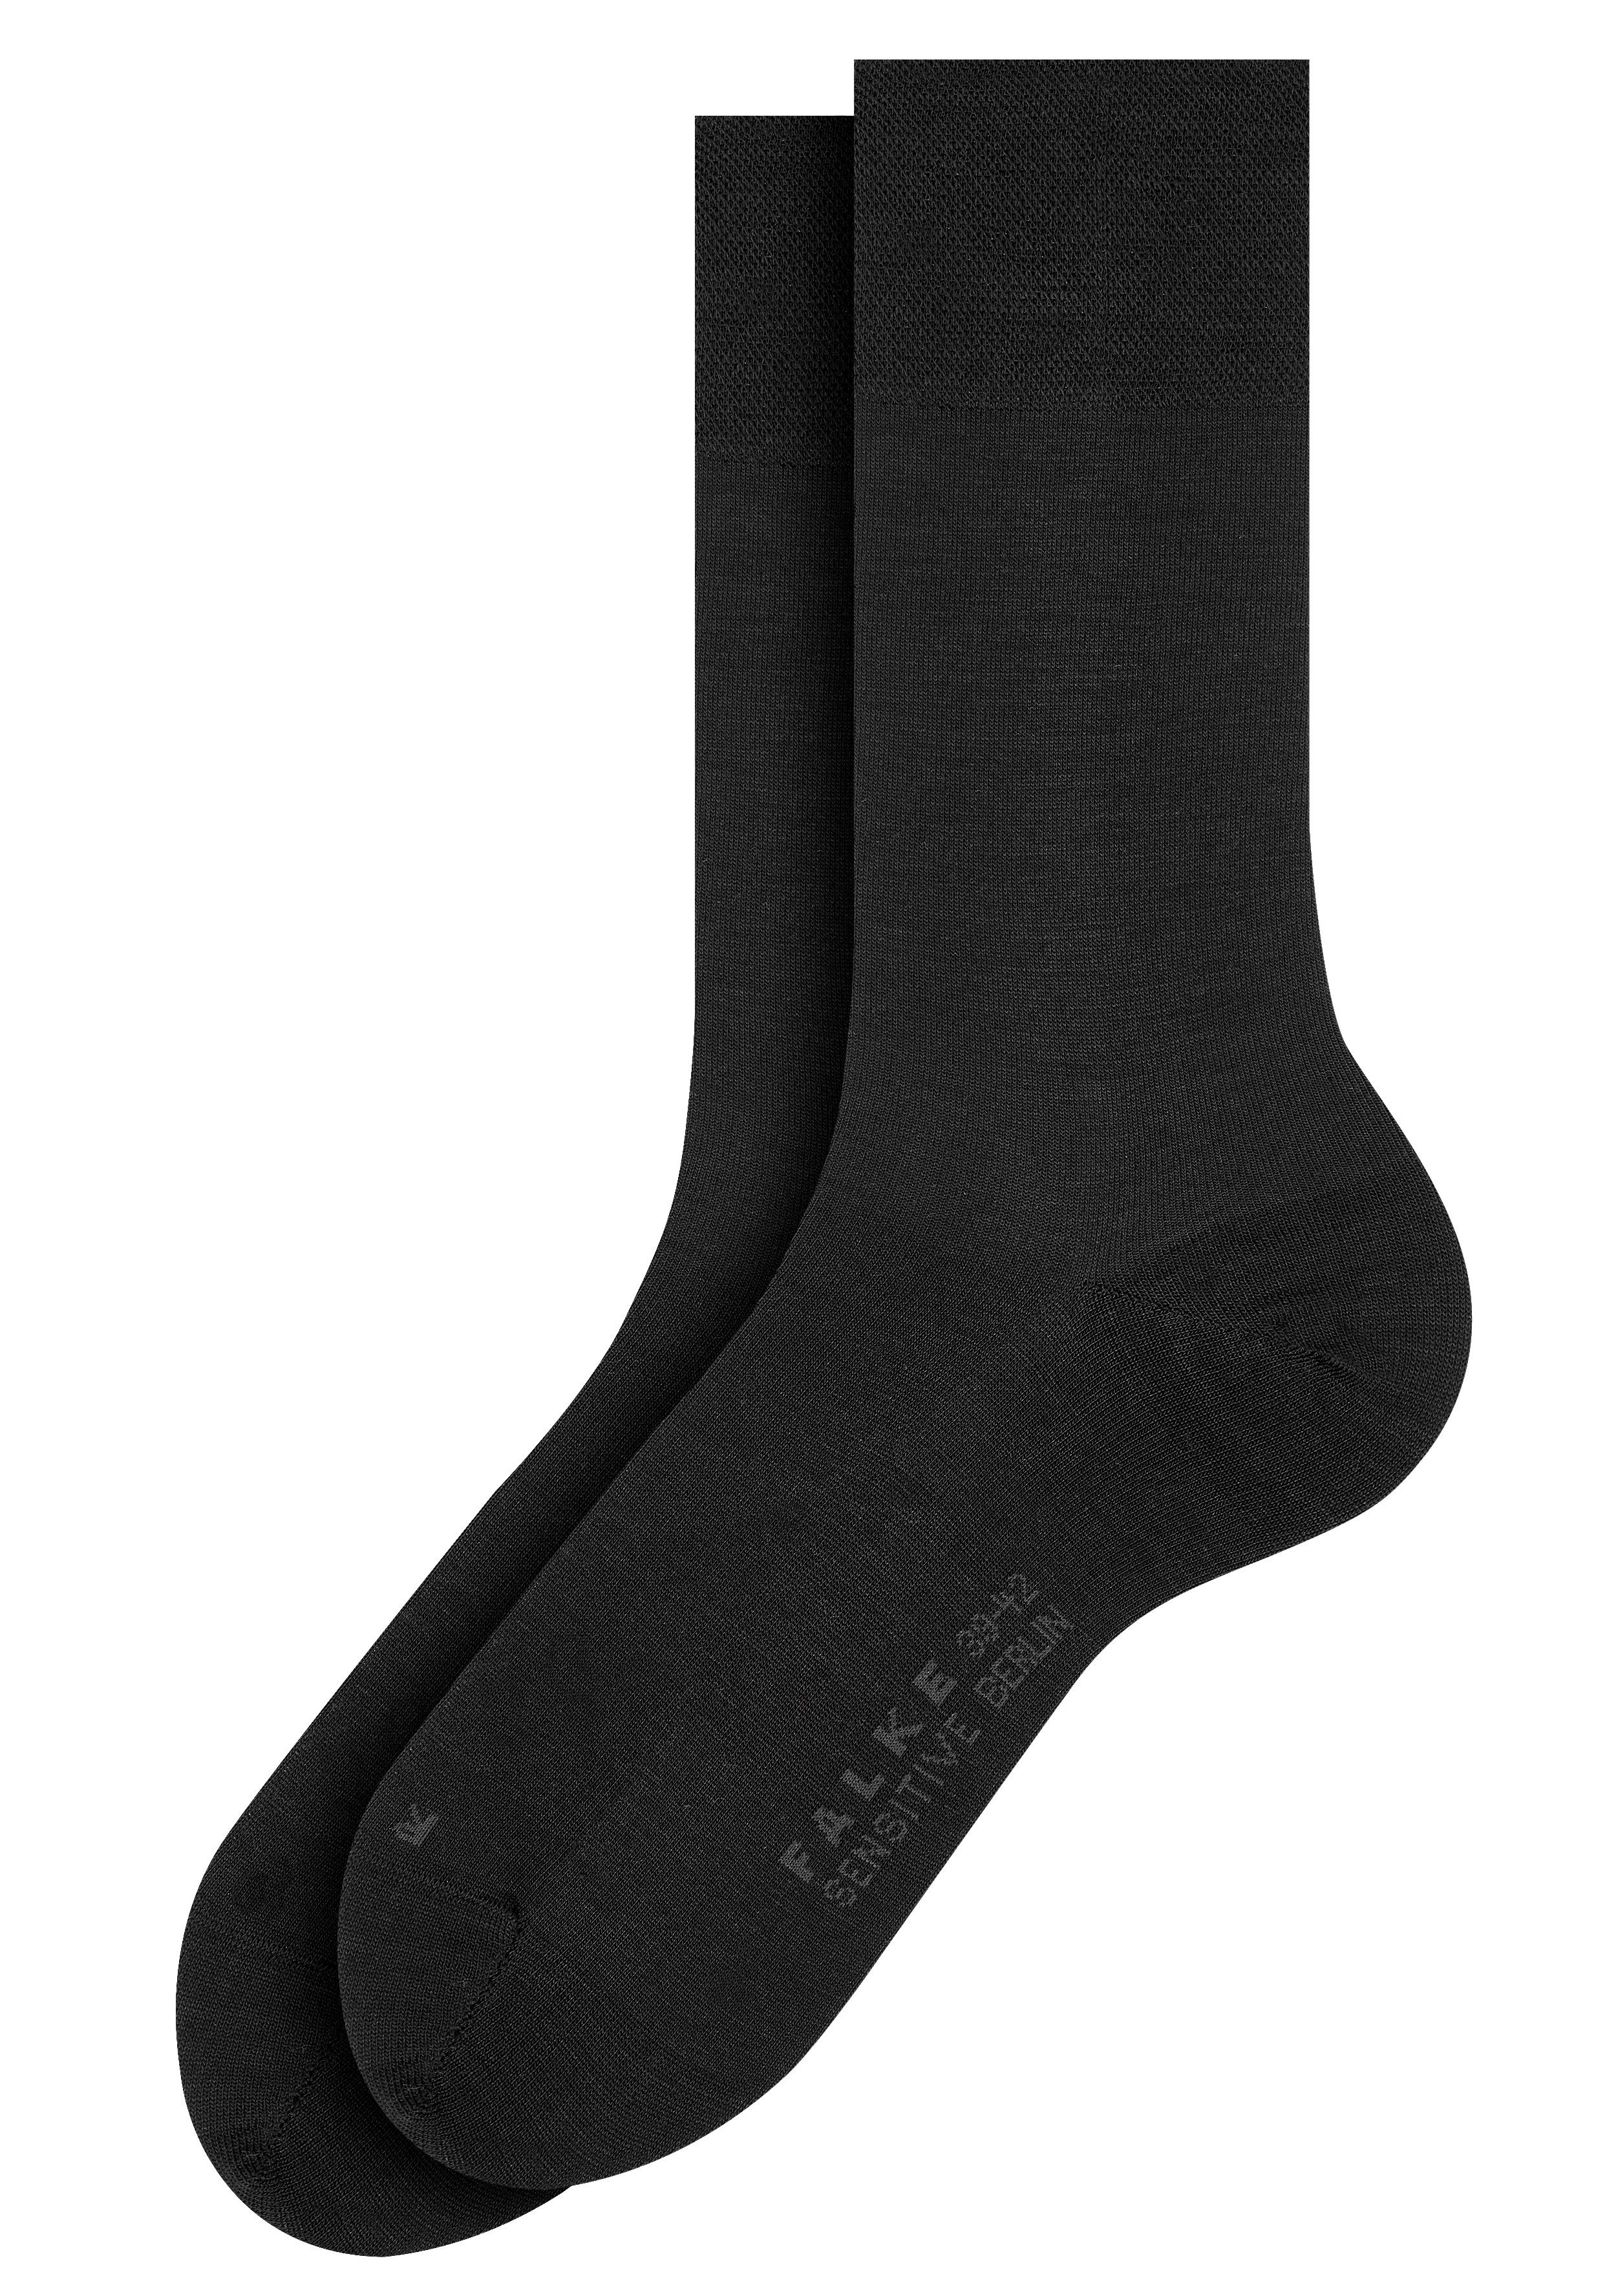 Socken schwarz Bündchen 2-Paar) sensitve FALKE ohne Berlin Gummi Sensitive (Packung, mit